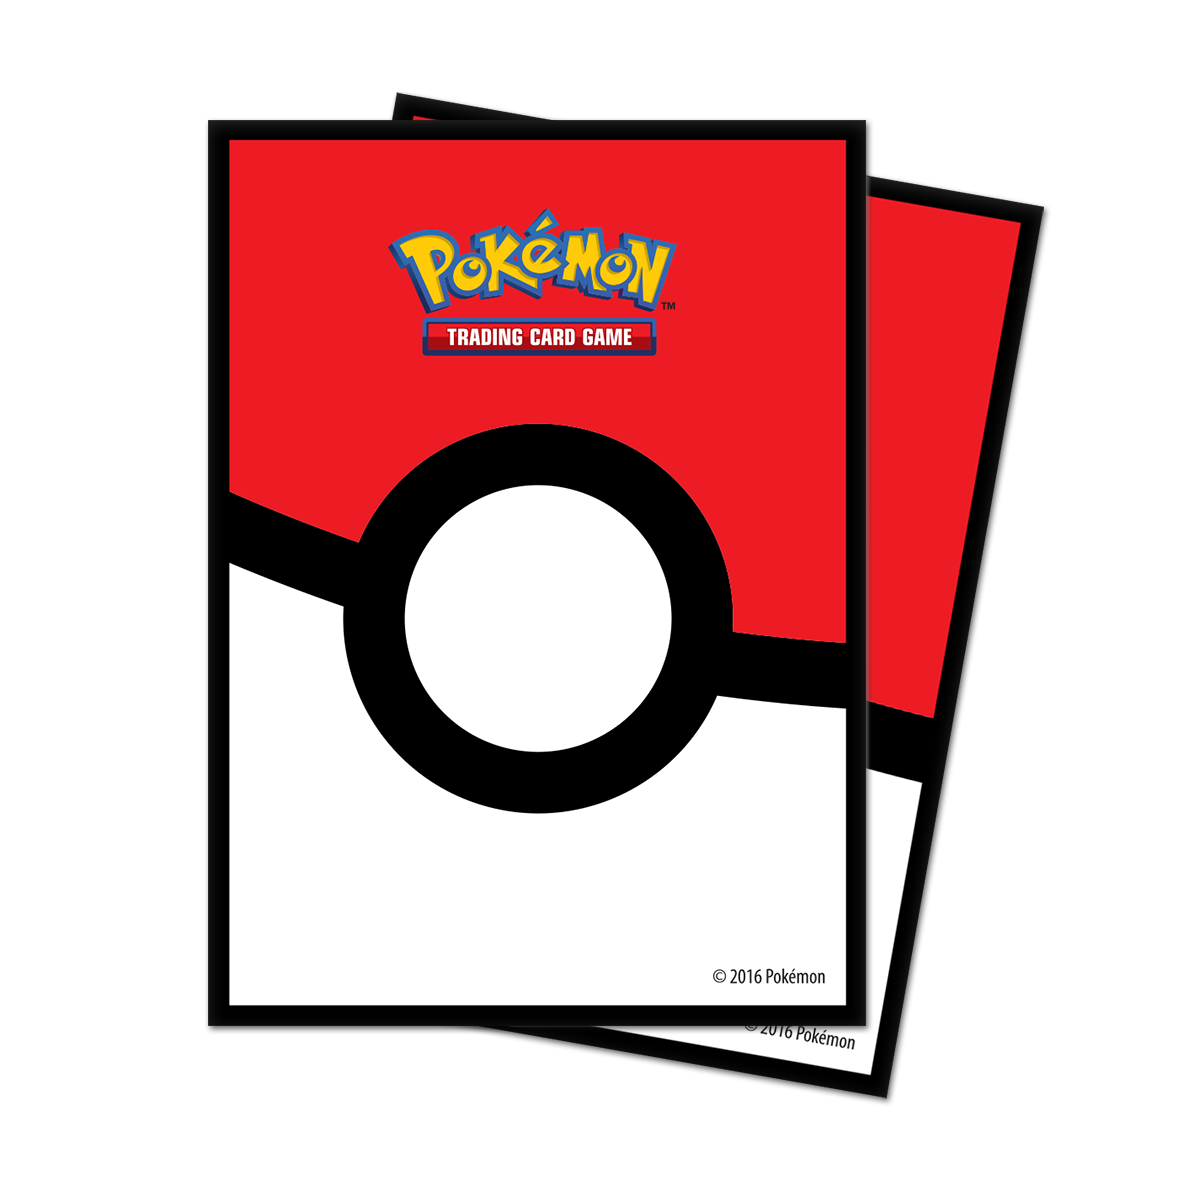 Lucario Standard Deck Protector Sleeves (65ct) for Pokémon